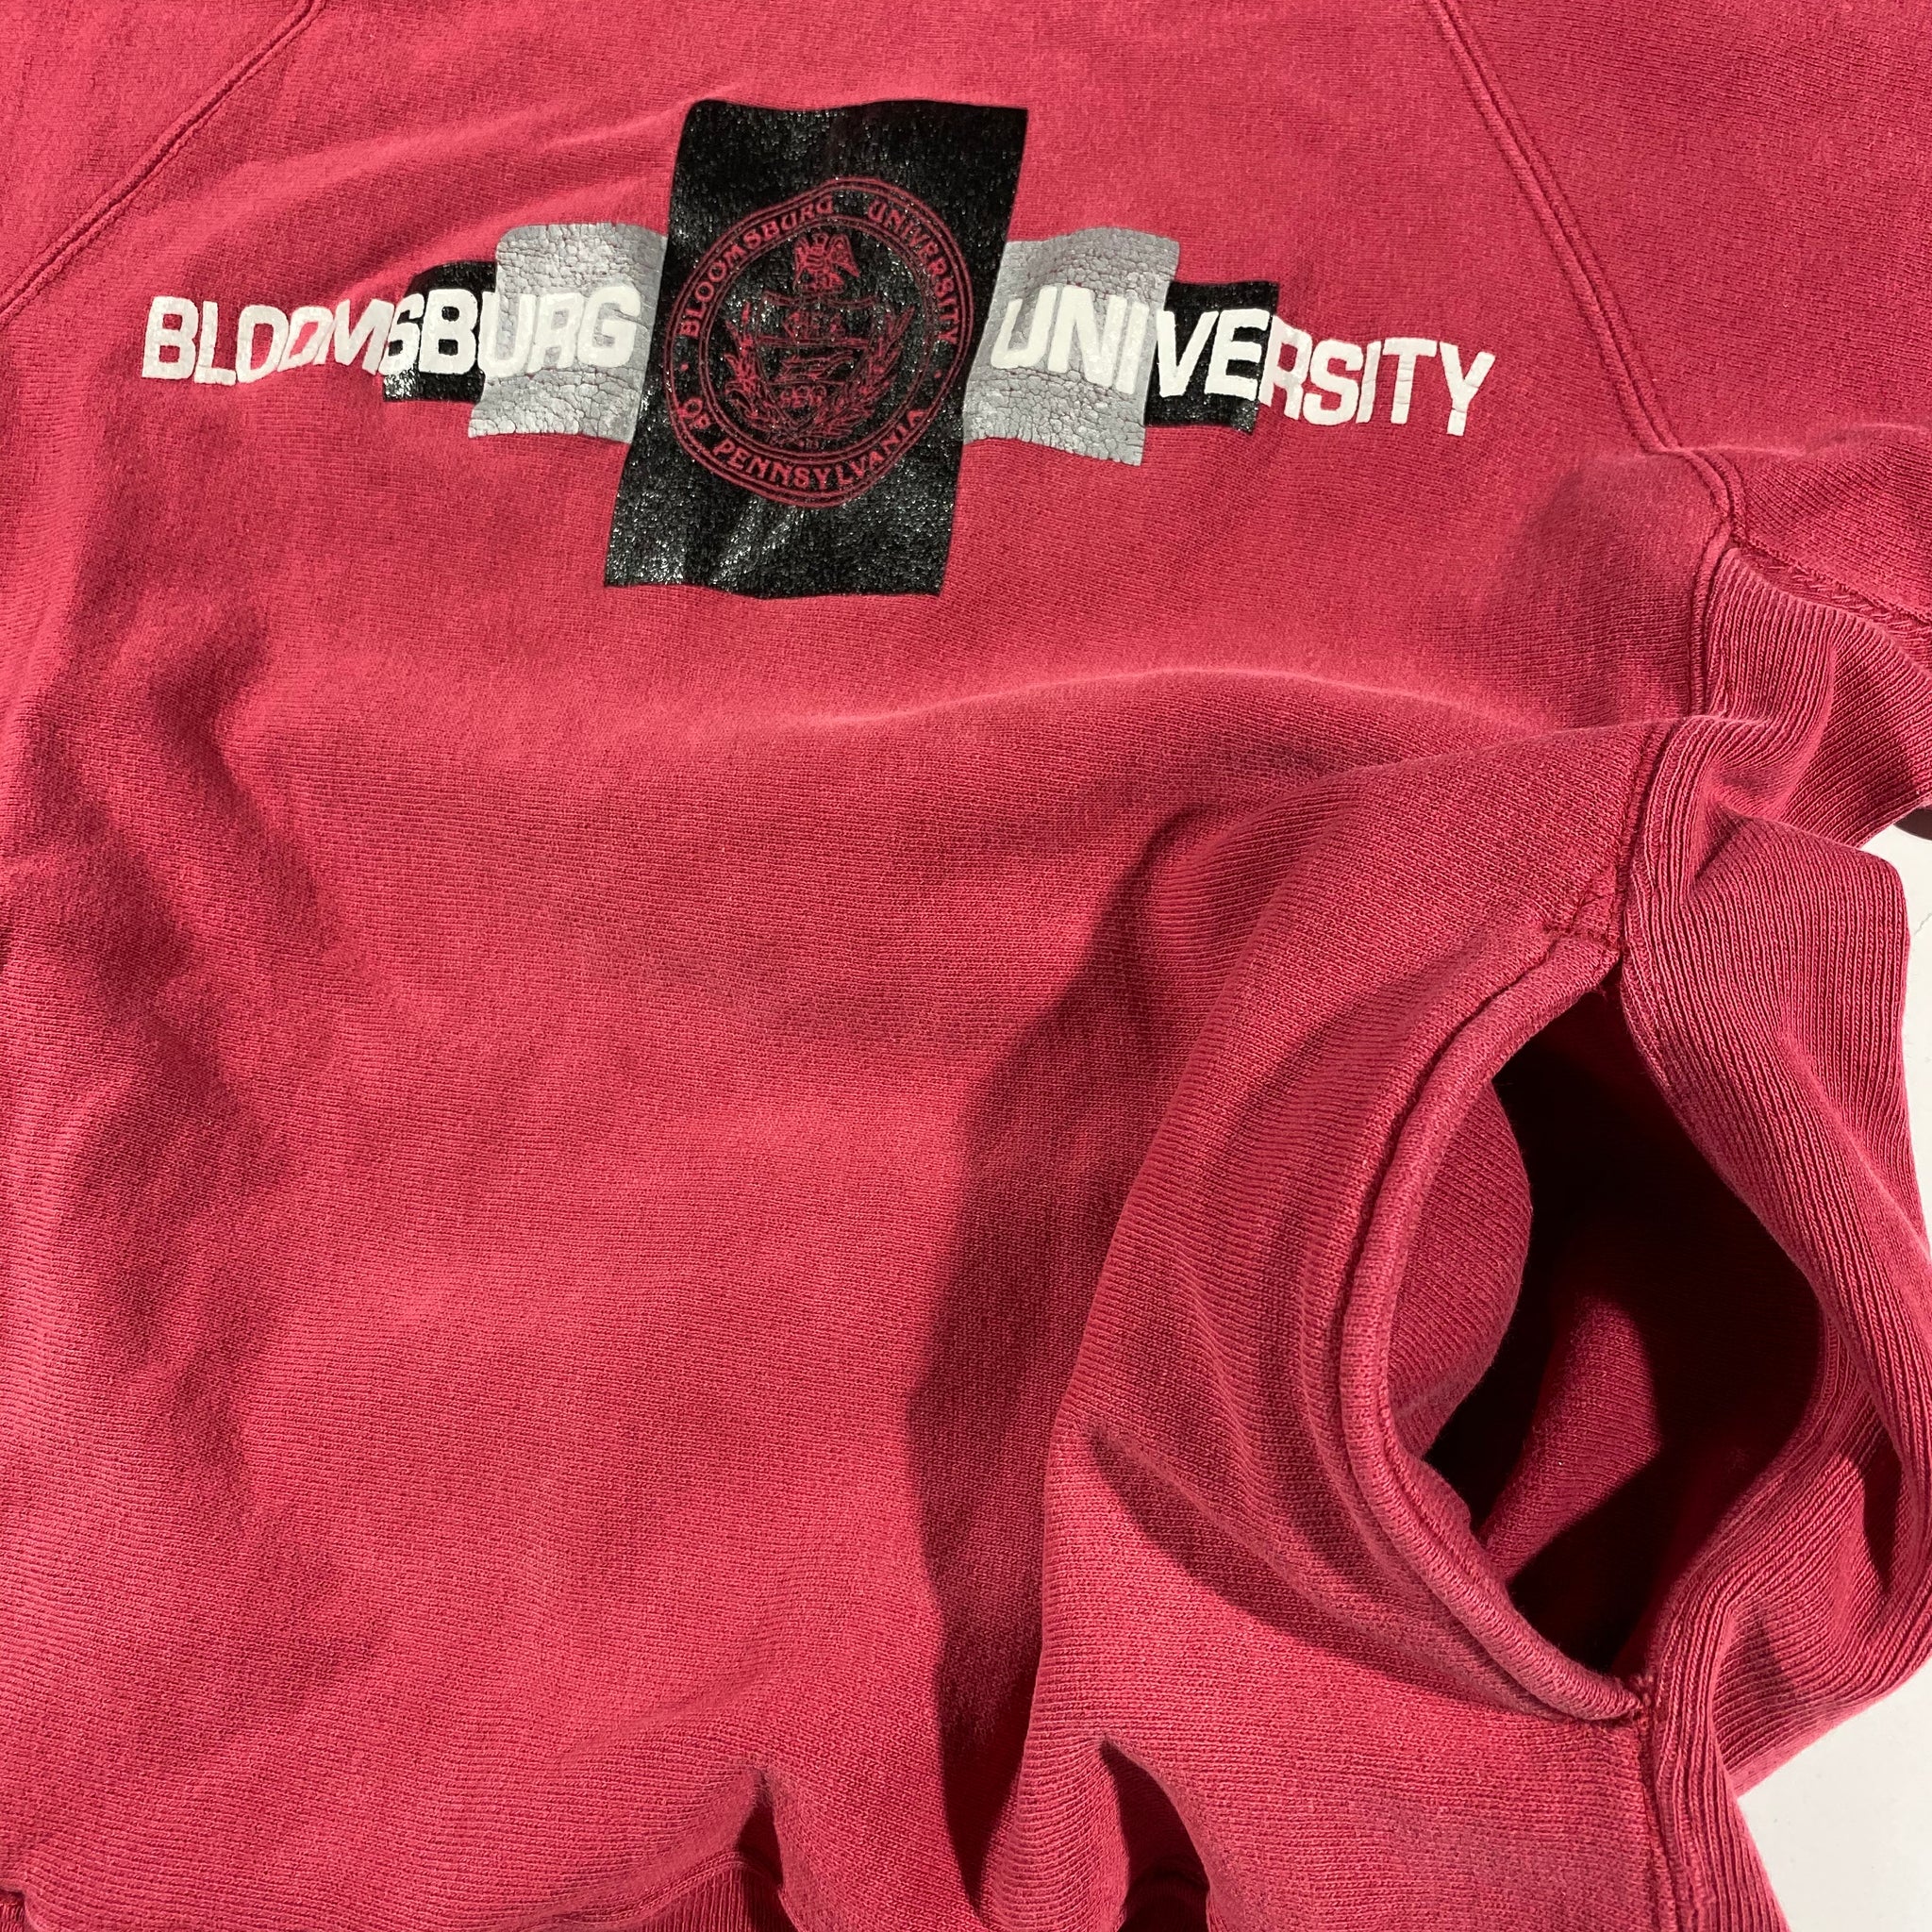 Bloomsburg University Champion reverse weave mock neck sweatshirt S/M fit